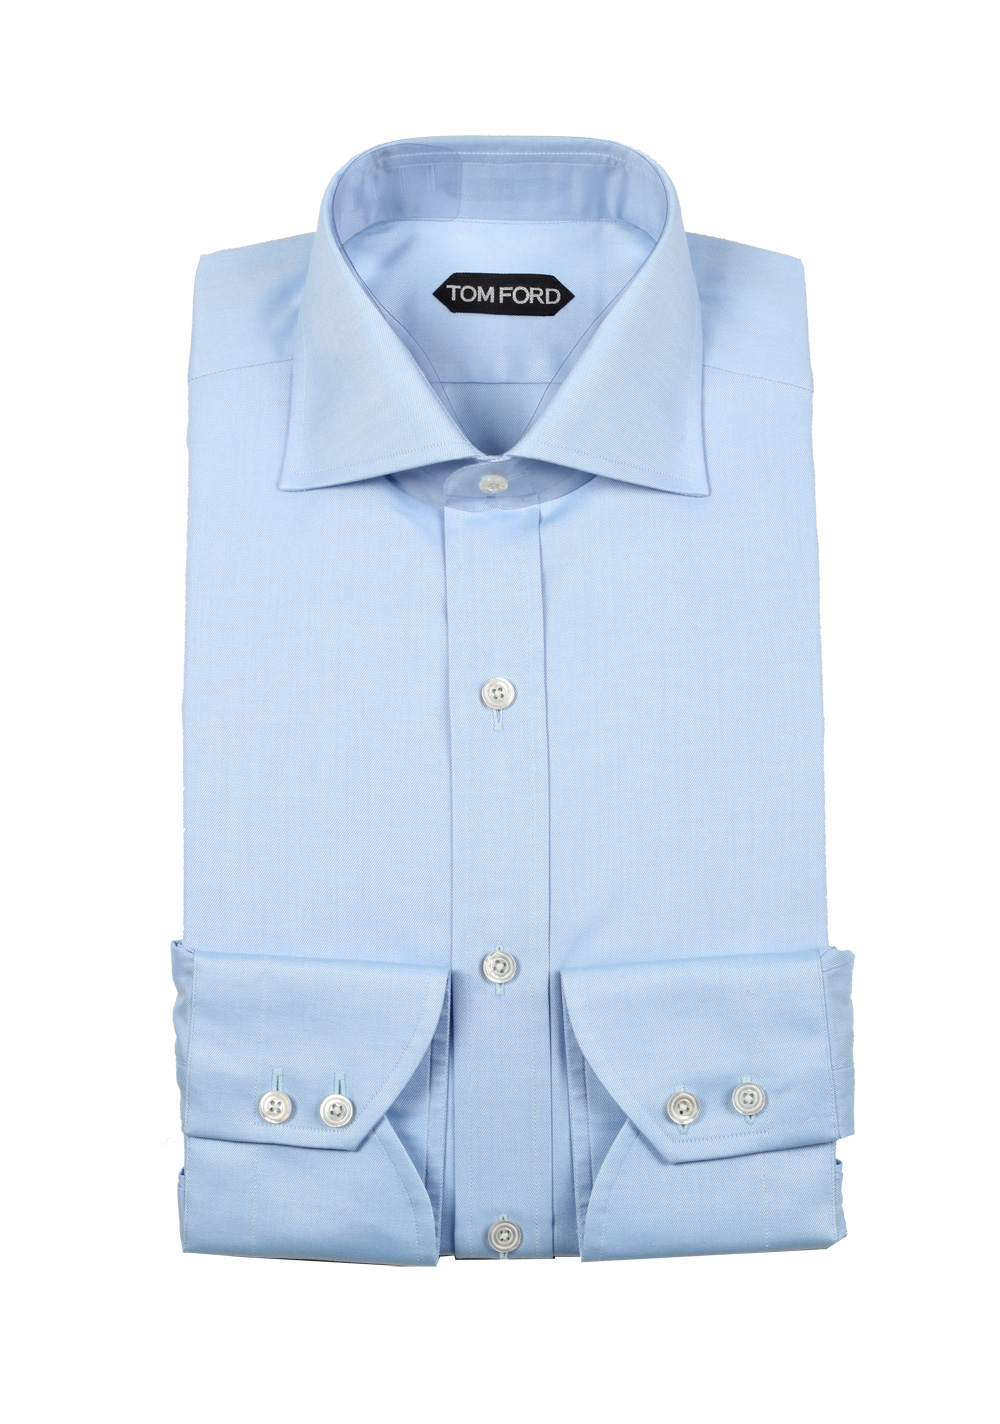 TOM FORD Solid Blue Shirt Size 40 / 15,75 U.S. | Costume Limité